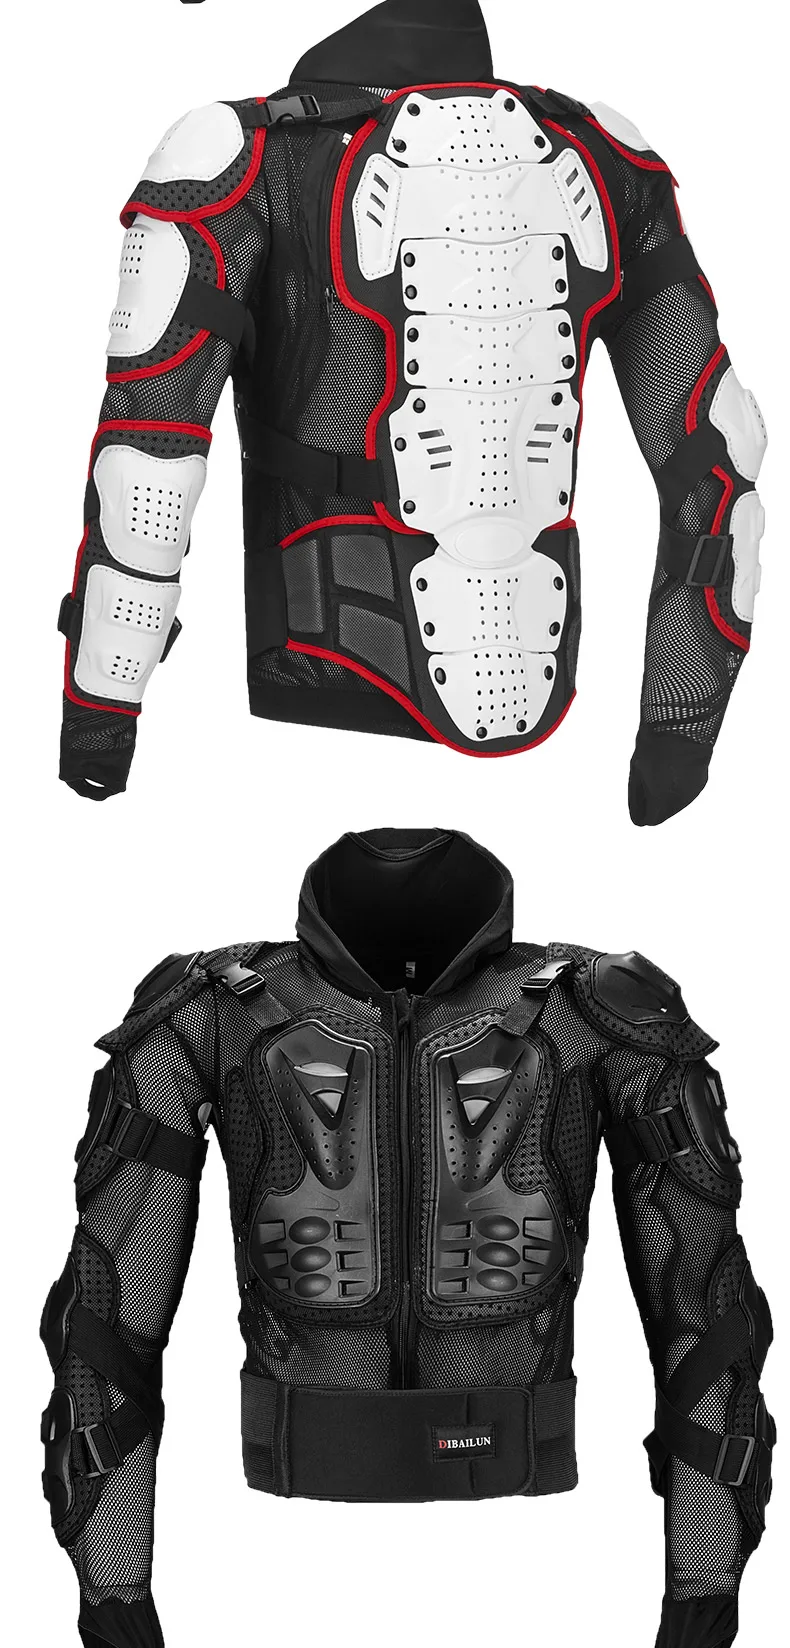 Gpcross Motorcycle Reflective Armor Jackets& Pants Motorbike Full Body Armour Protective Gear Moto Racing Clothing Jackets